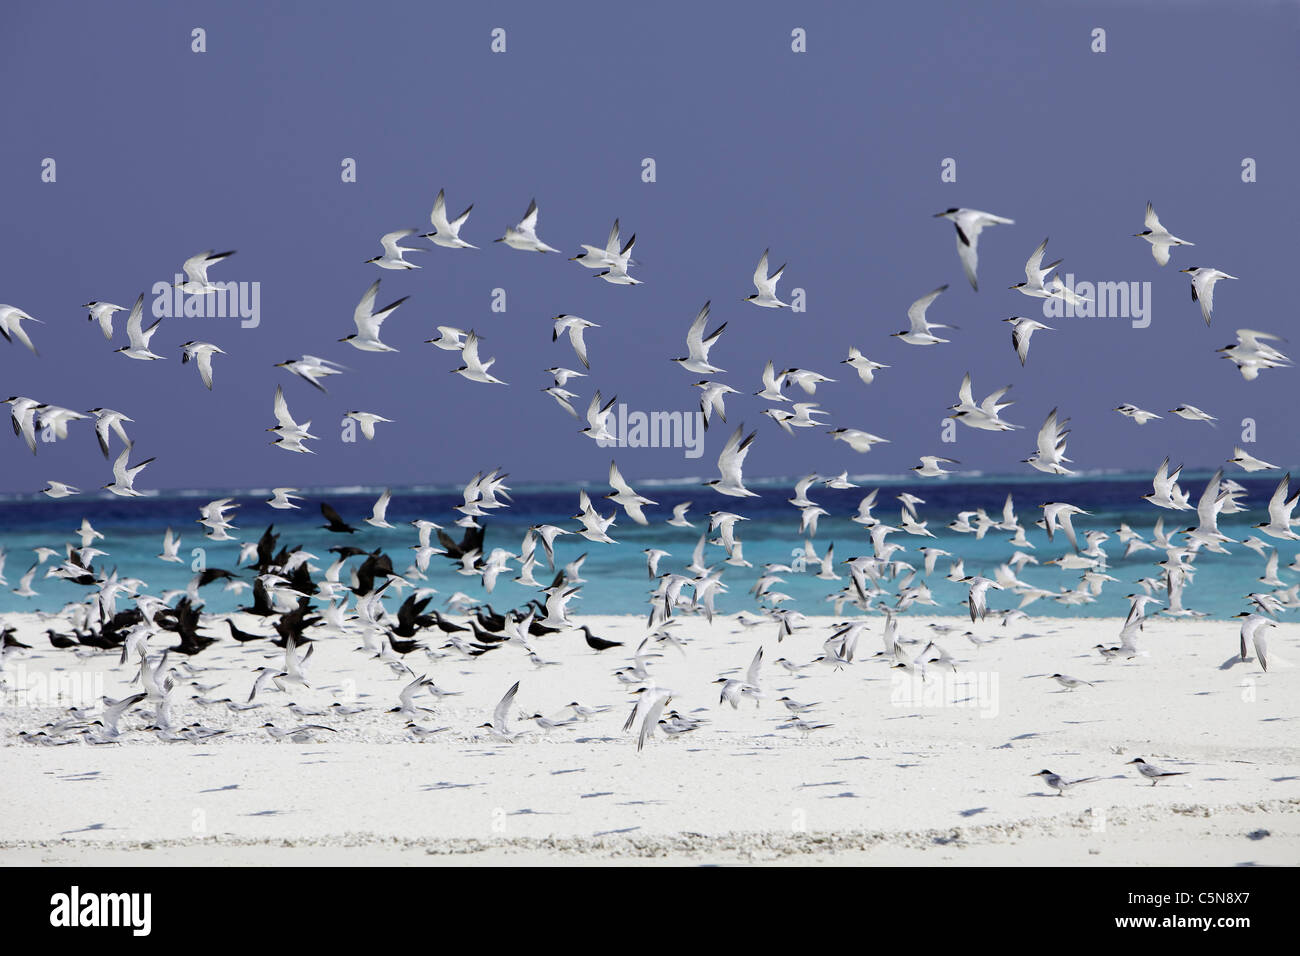 Terns on Sand Bank, Sterna sp., Indian Ocean, Maldives Stock Photo